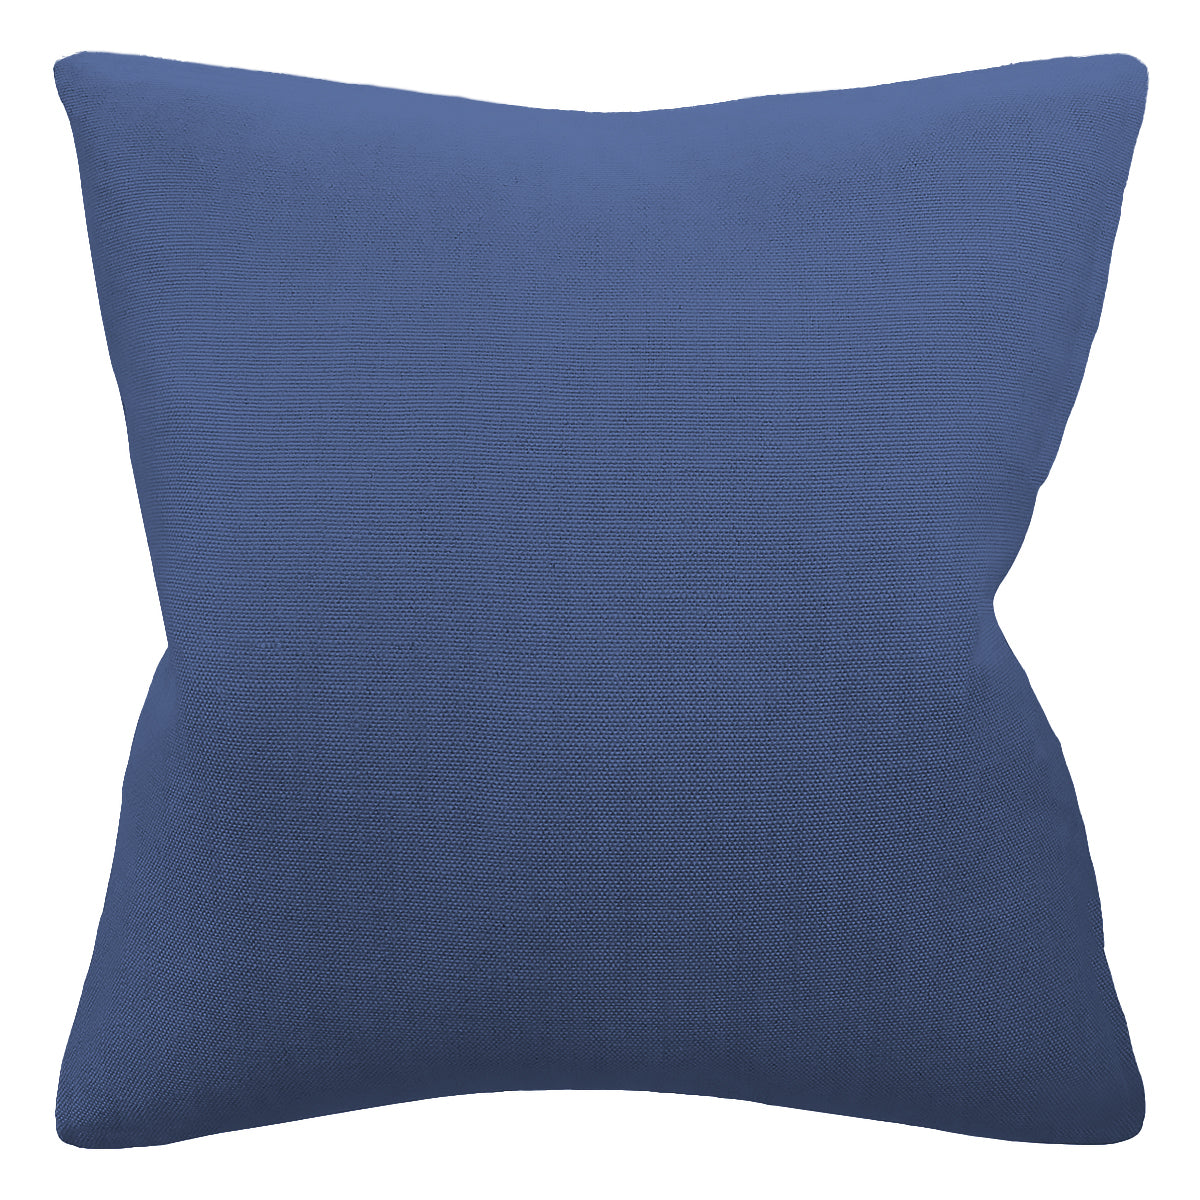 Ryan Studio Slubby Linen Piped Decorative Pillow